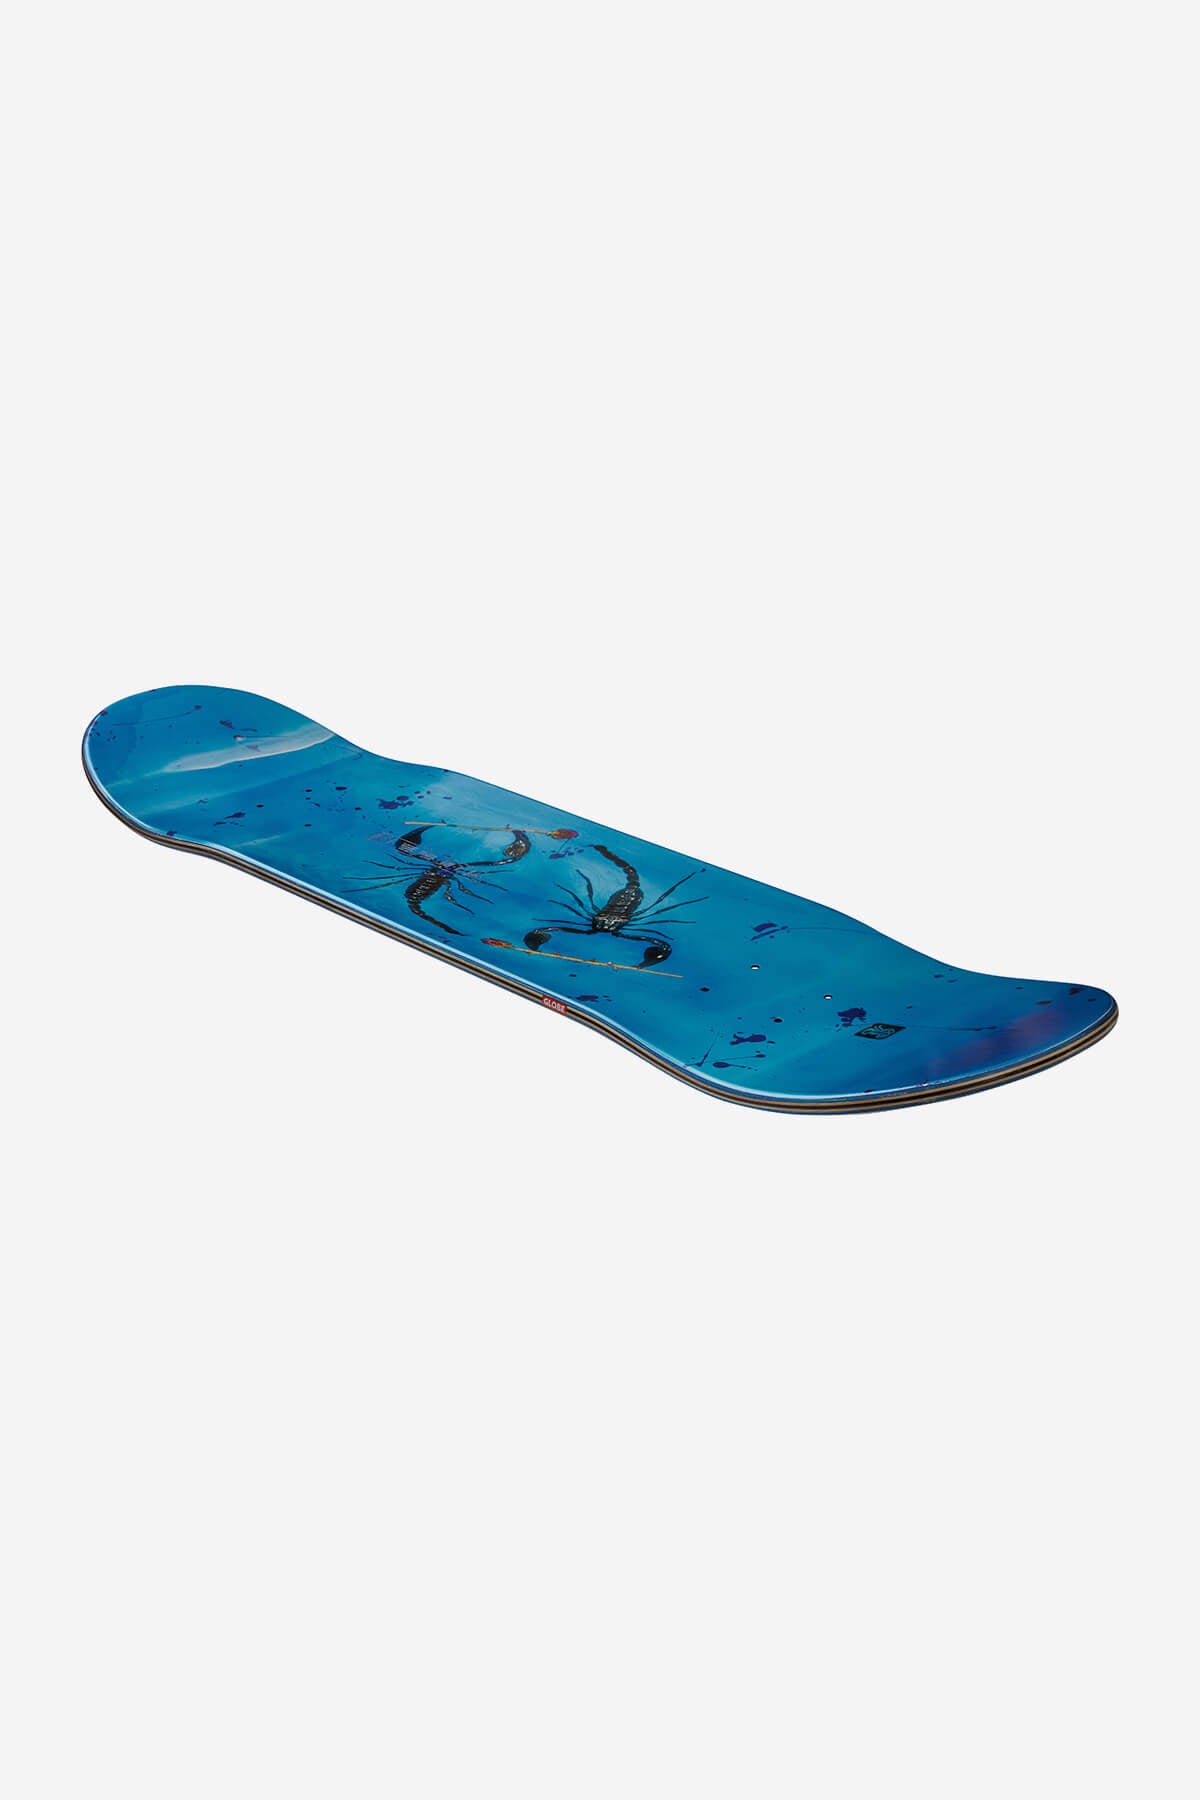 g2 rholtsu scorps 8.0" skateboard deck